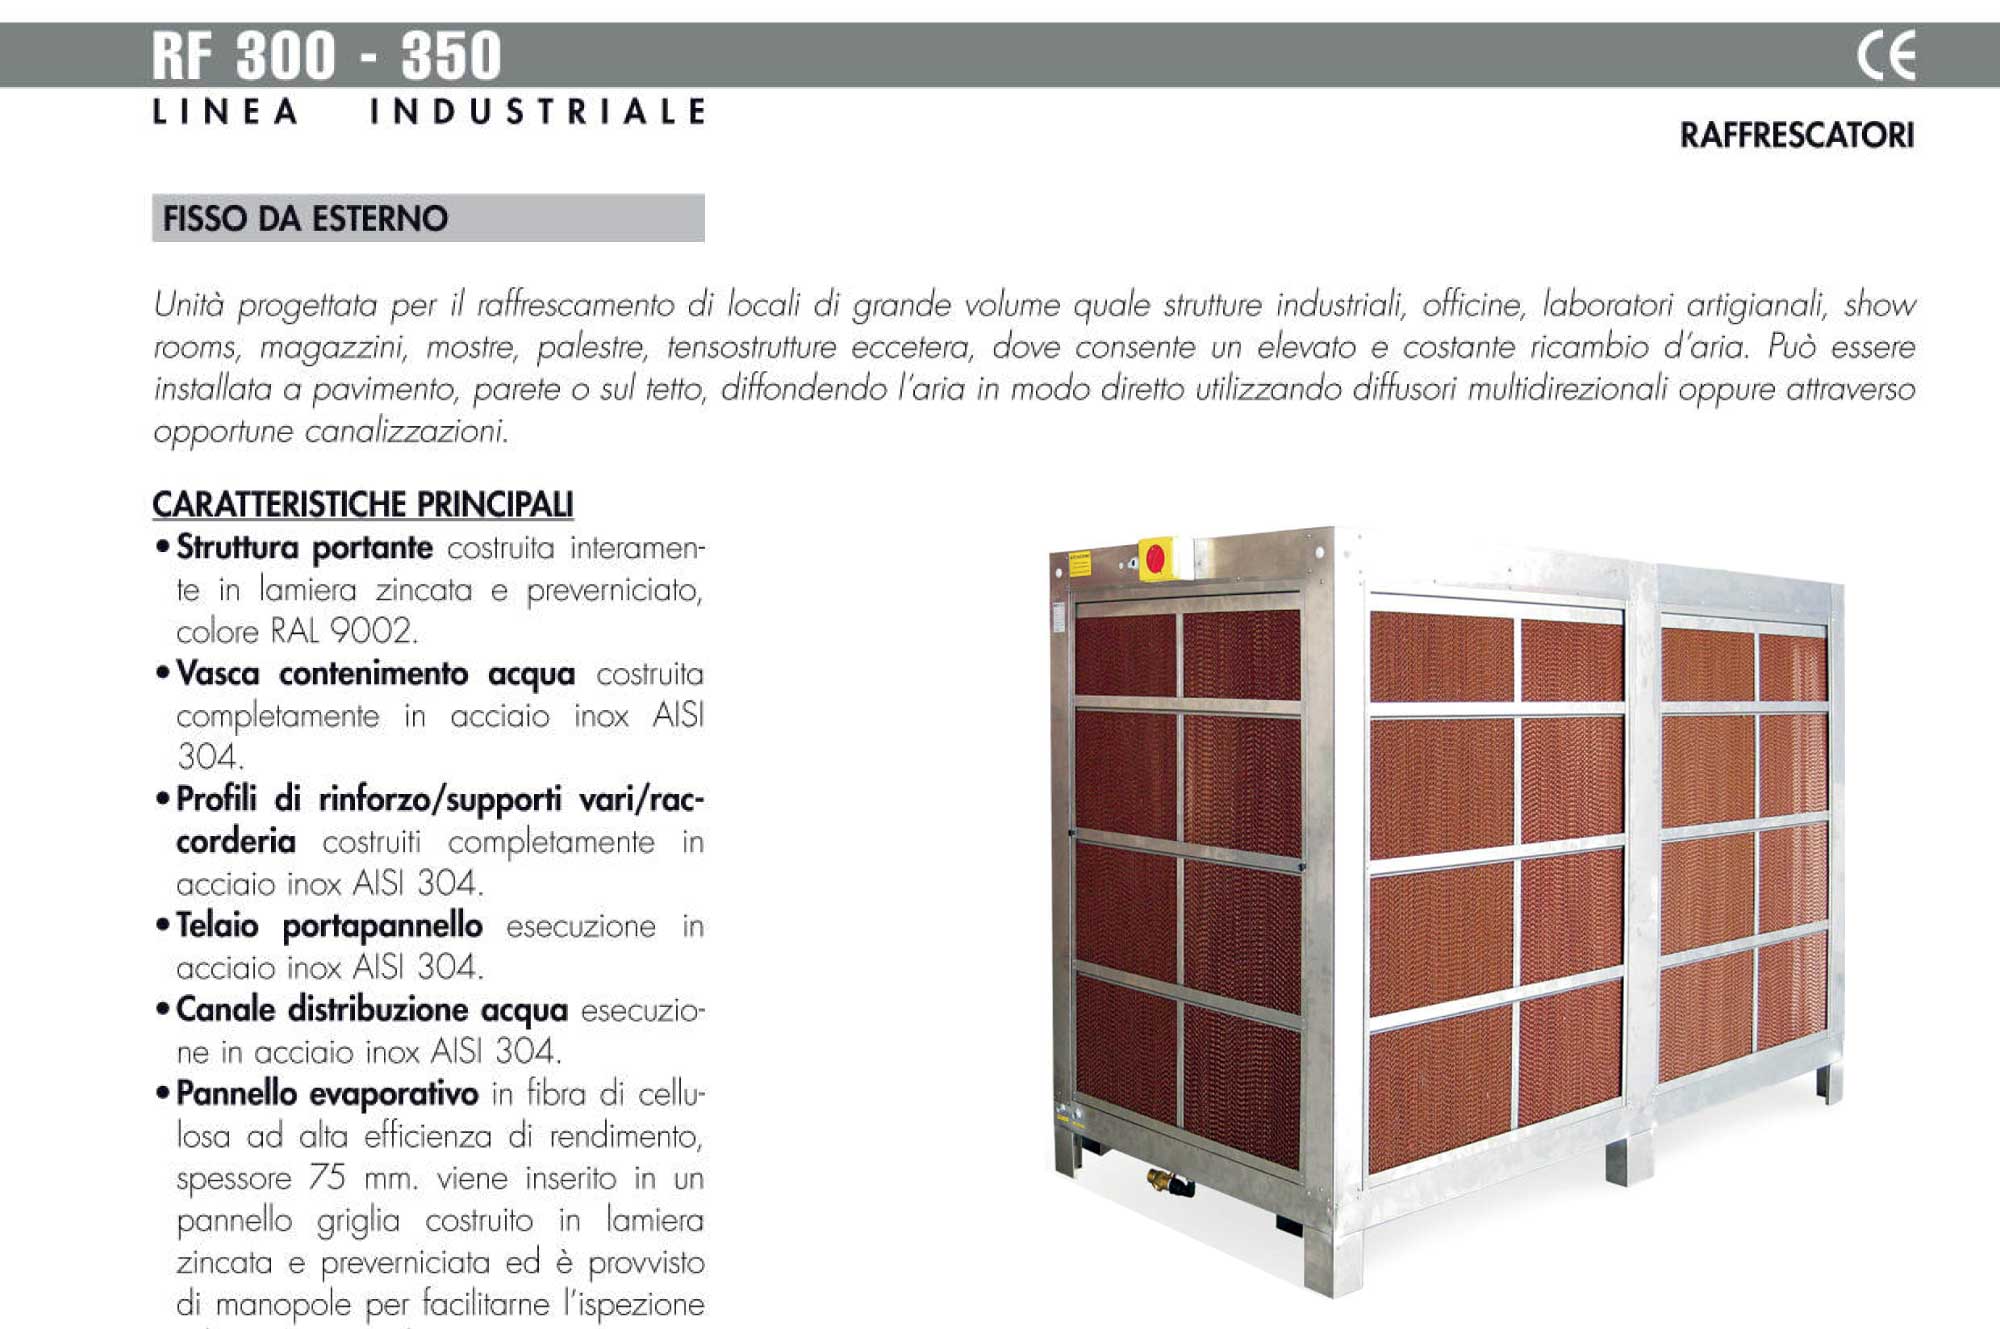 Industrial Evaporative Coolers RF 300-350